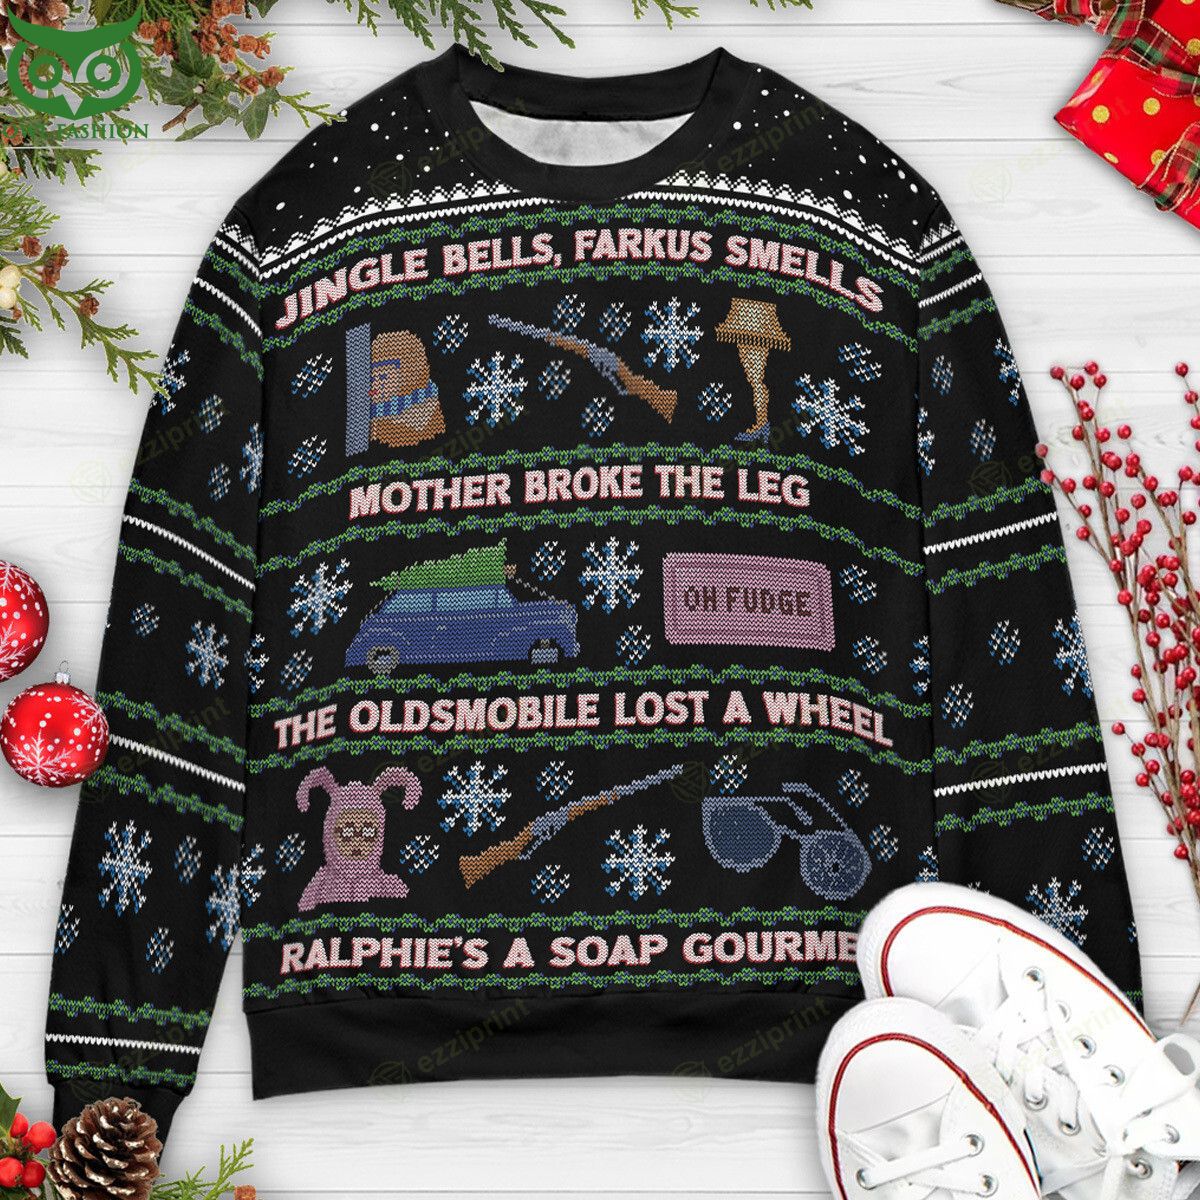 Jinger Bells Farkus smells A Christmas Story Sweater